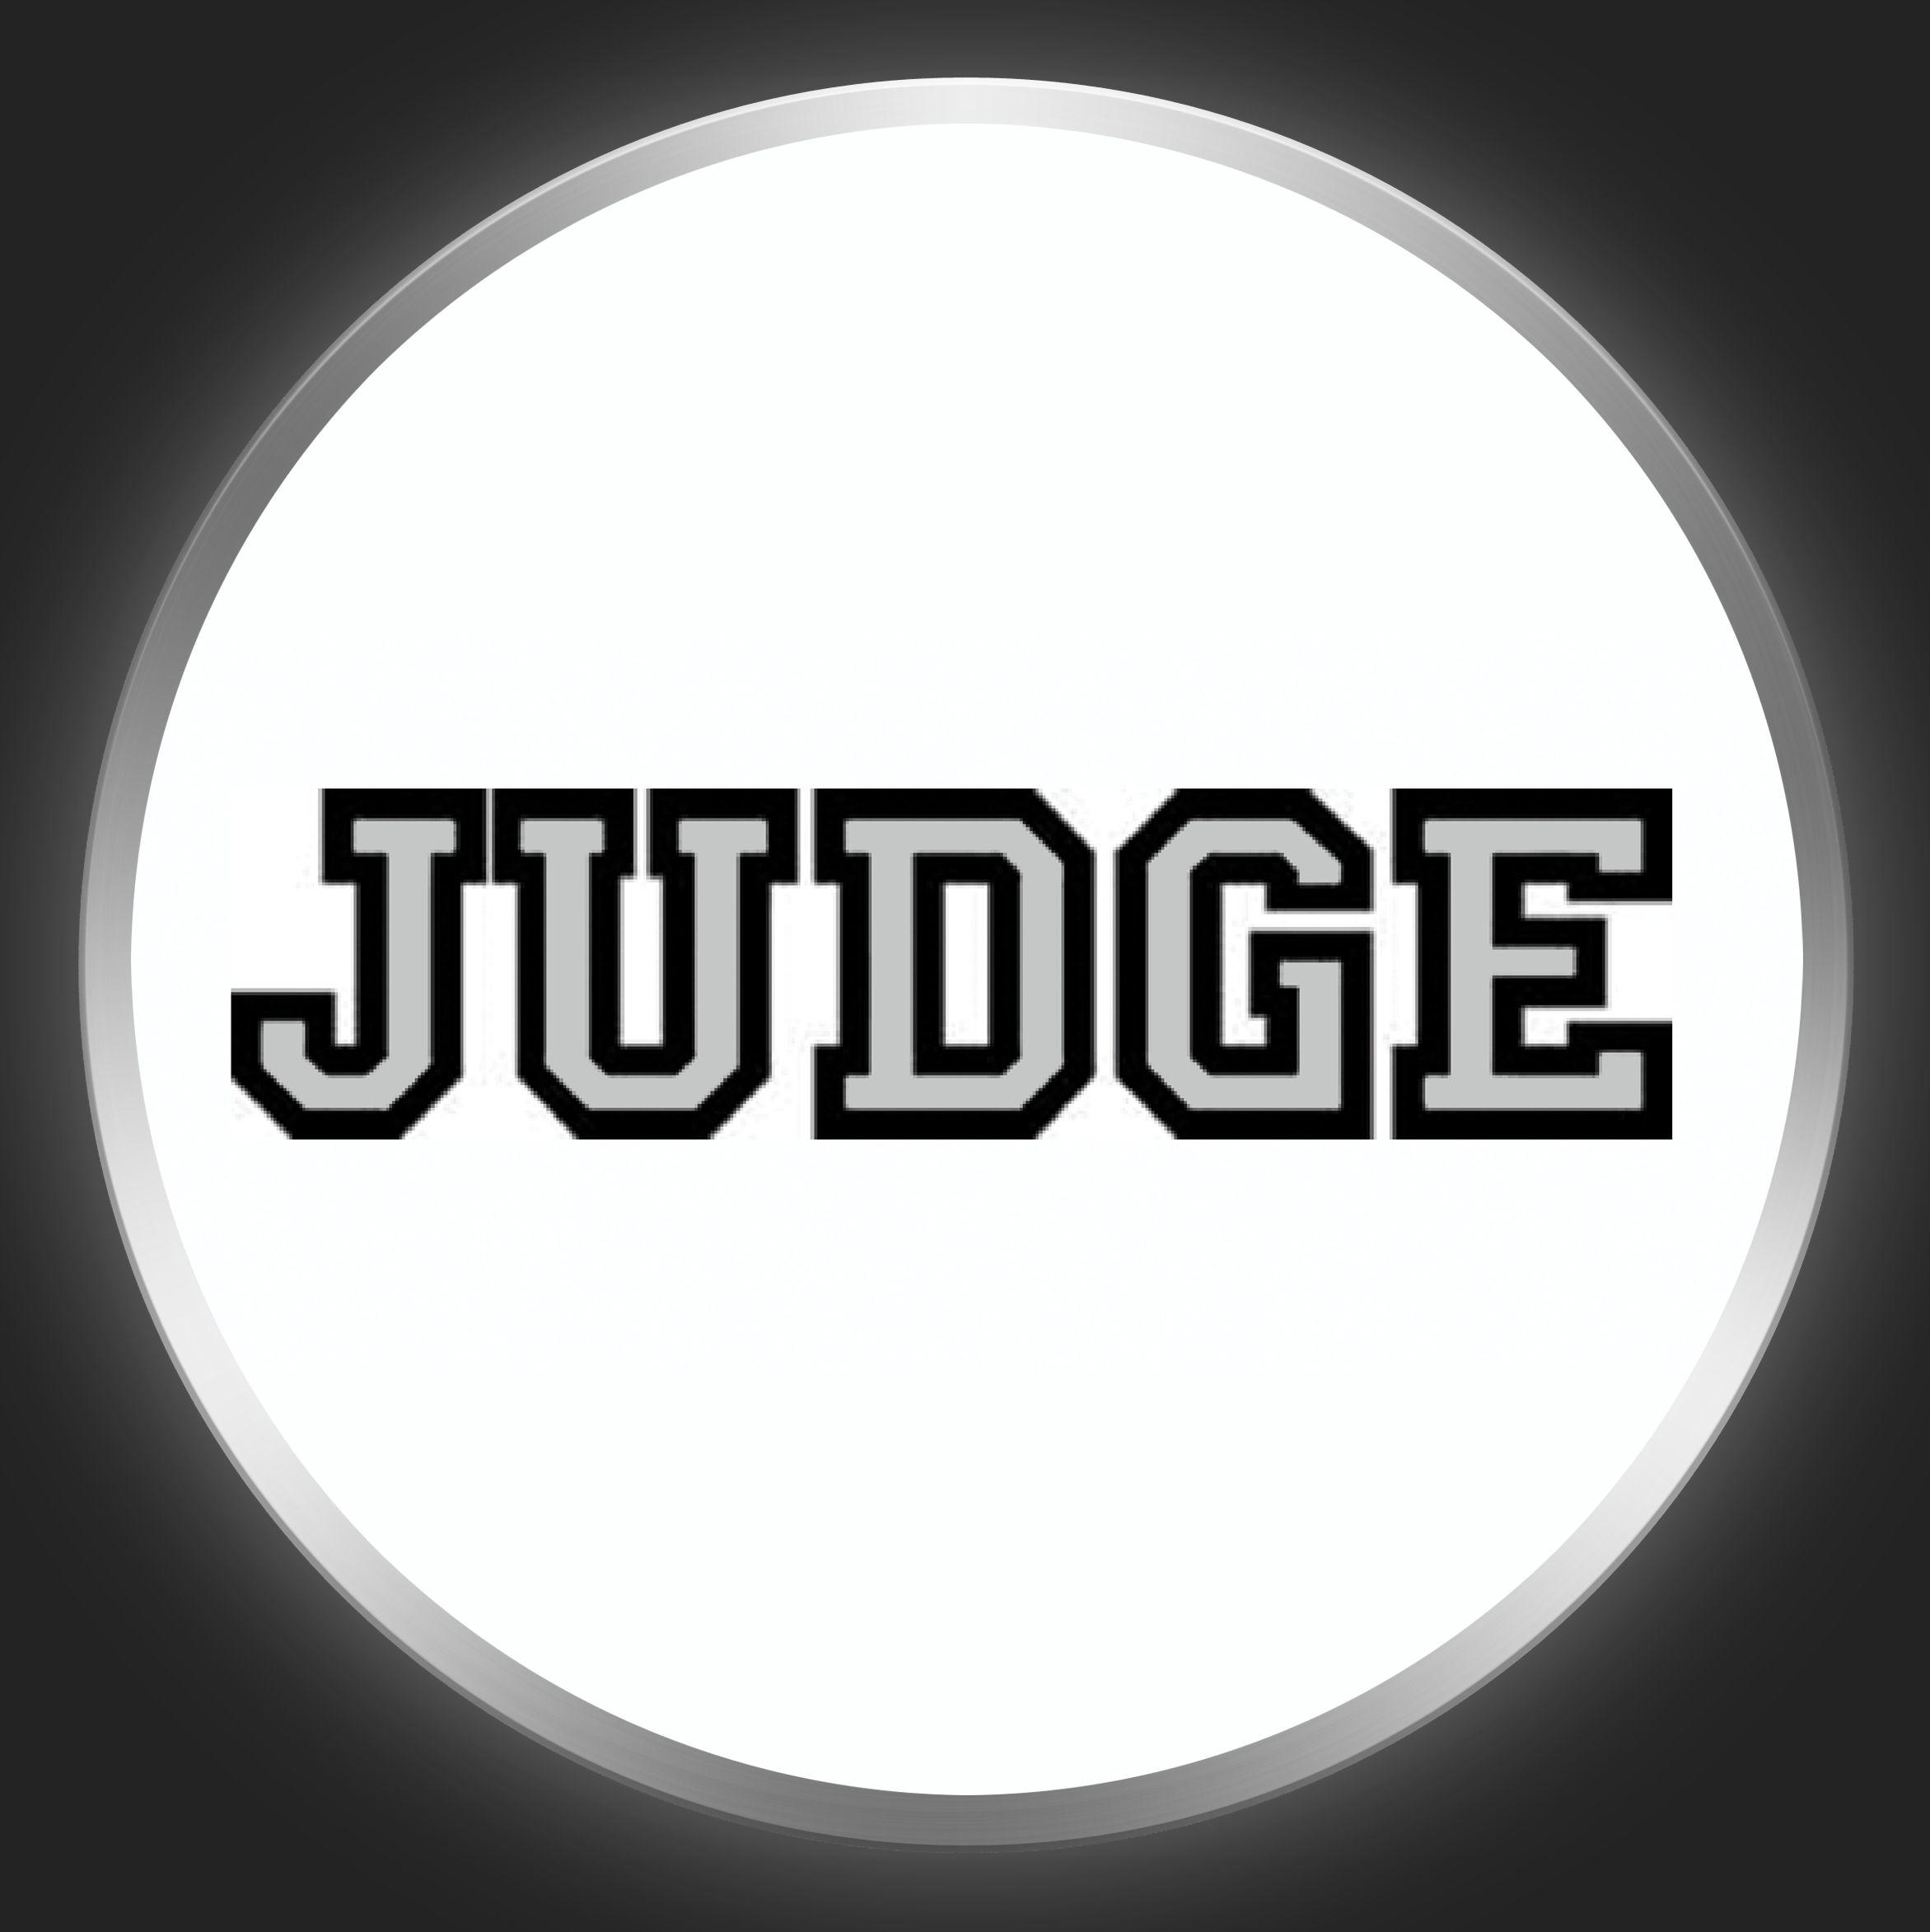 Judge Logo - JUDGE / Grey Logo On White Button